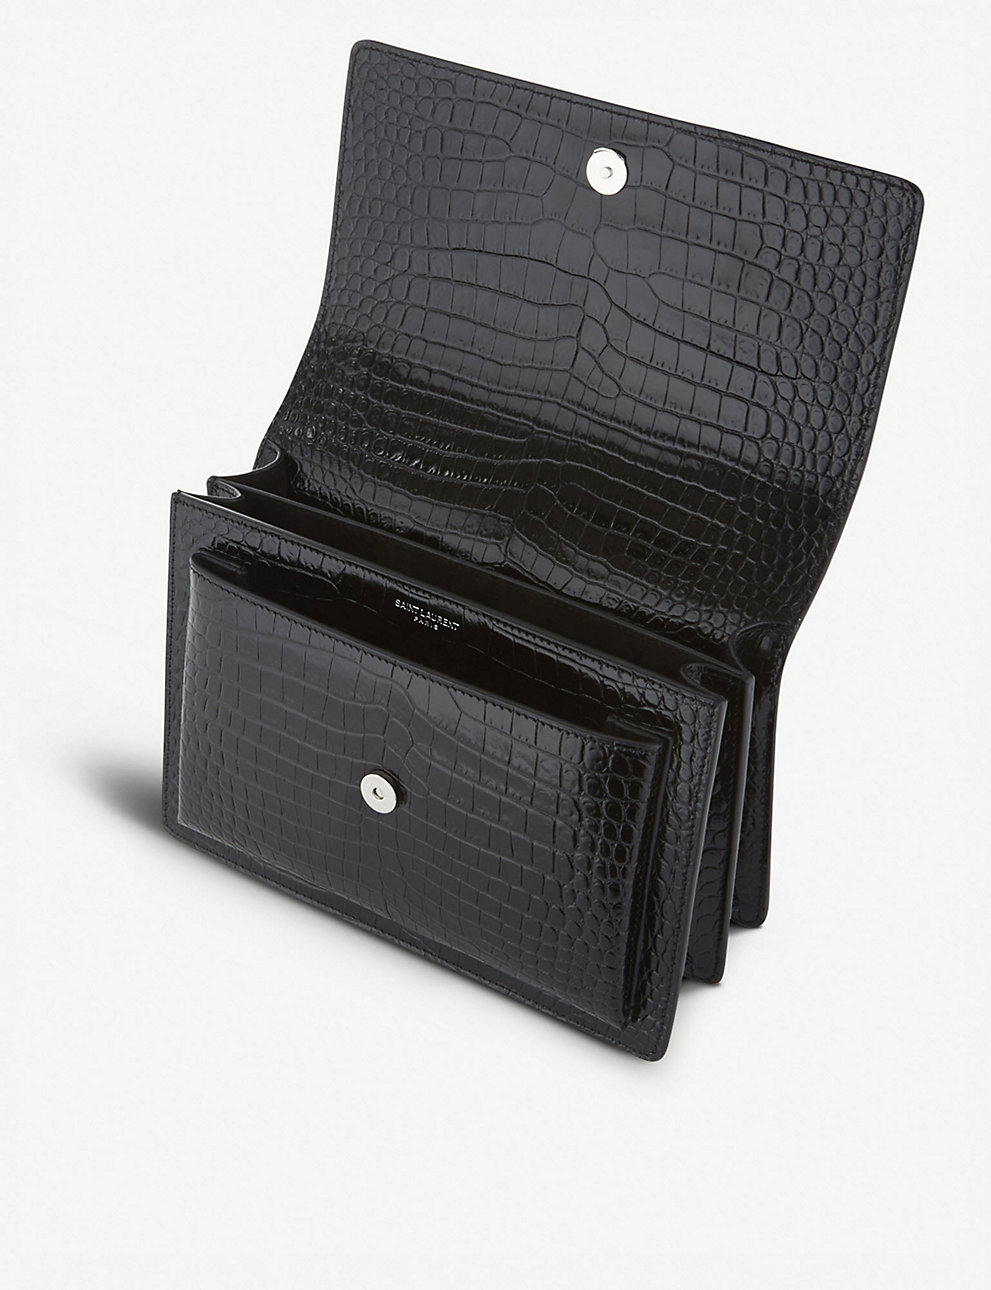 Yves Saint Laurent Sunset Crocodile Leather Wallet